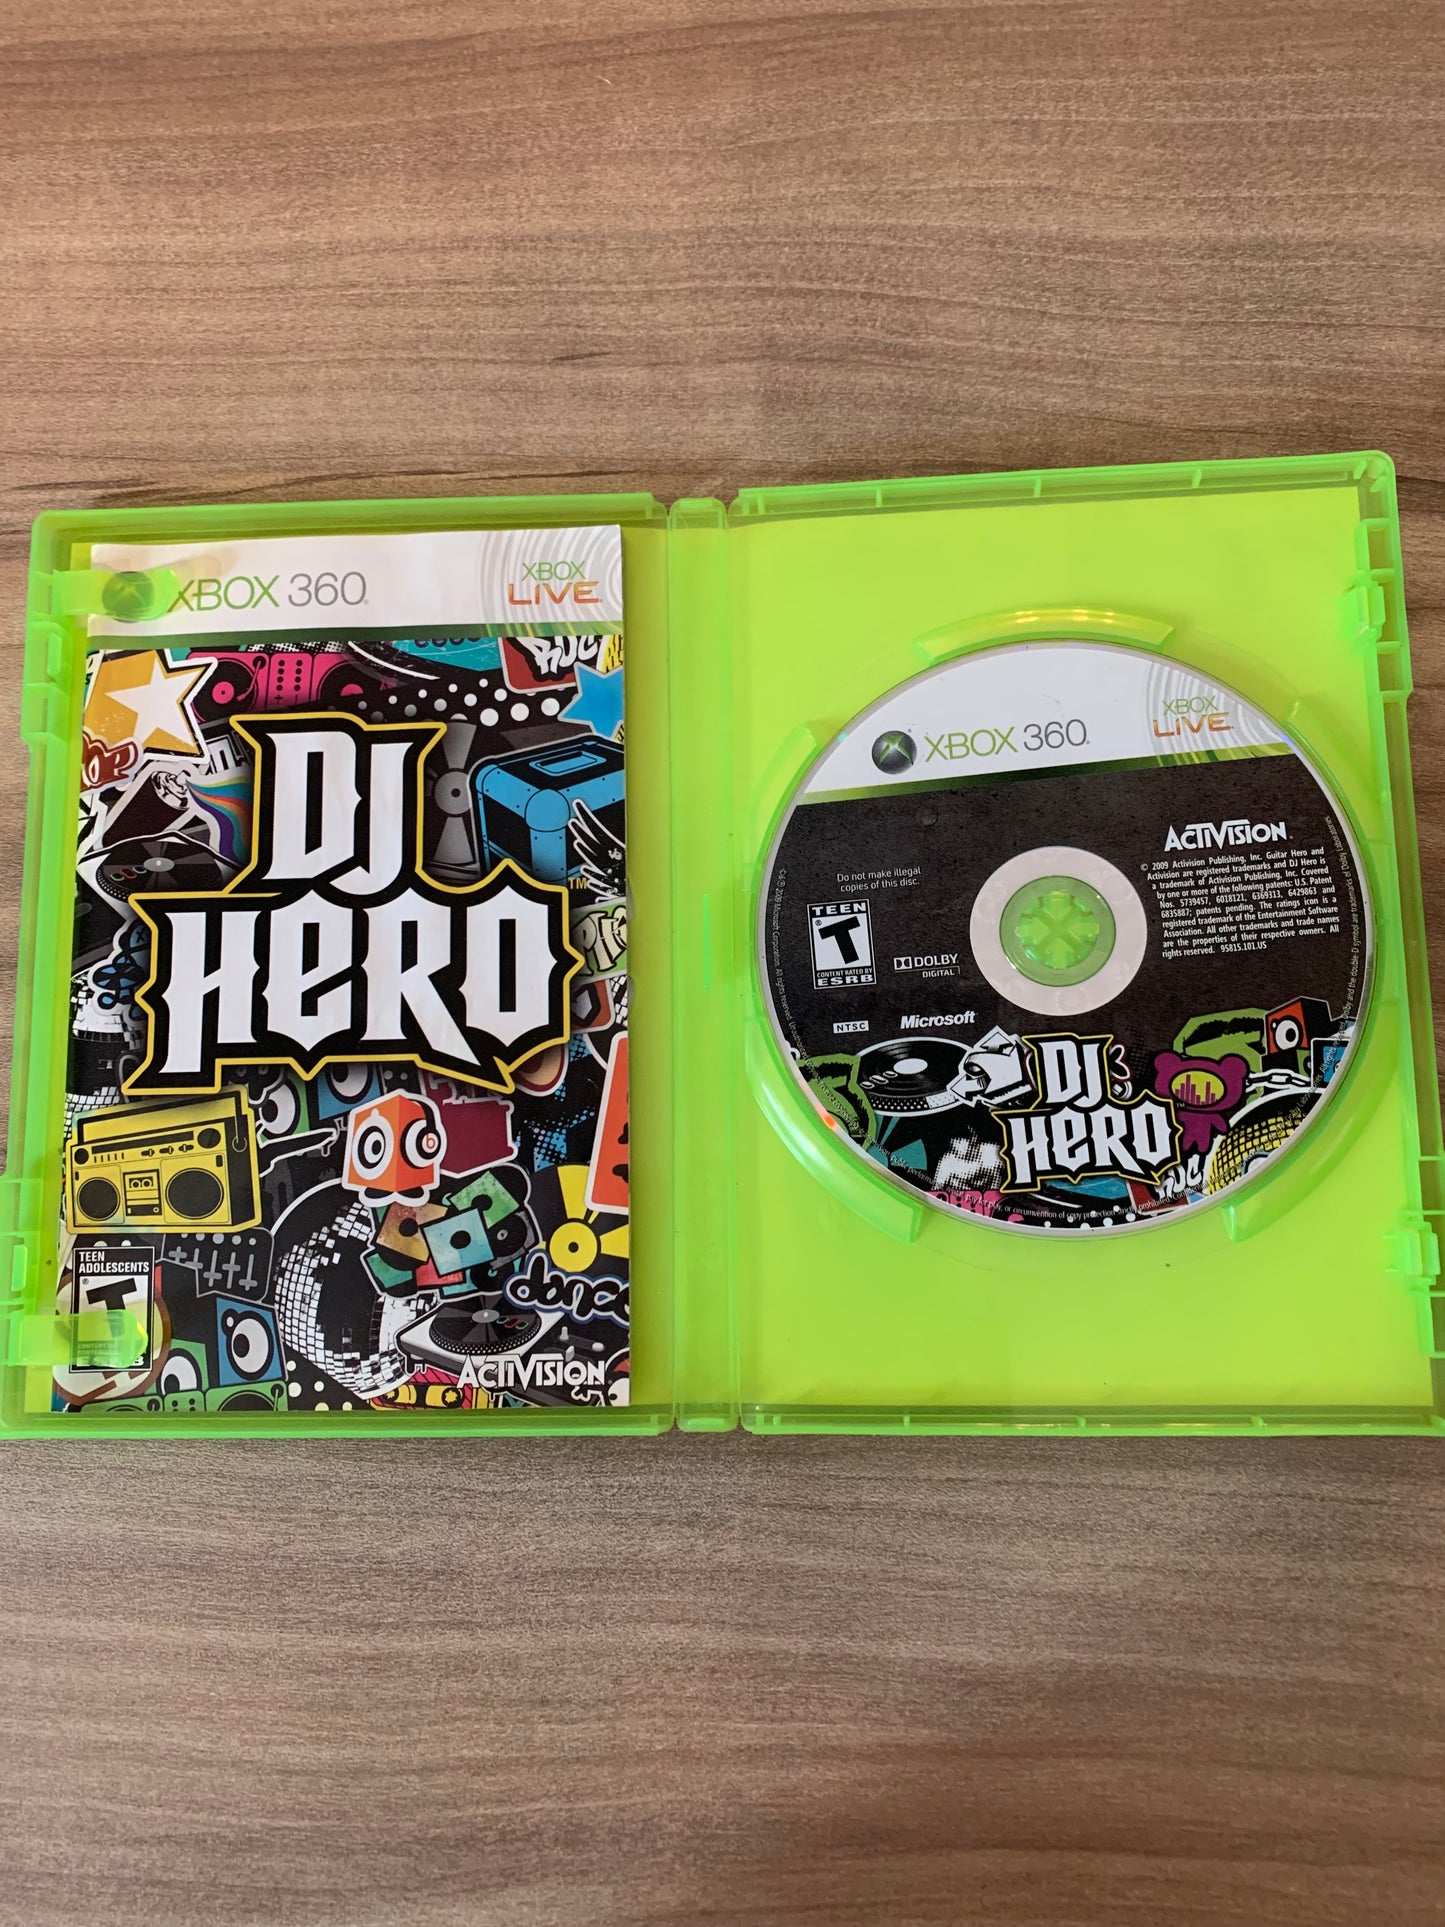 MiCROSOFT XBOX 360 | DJ HERO